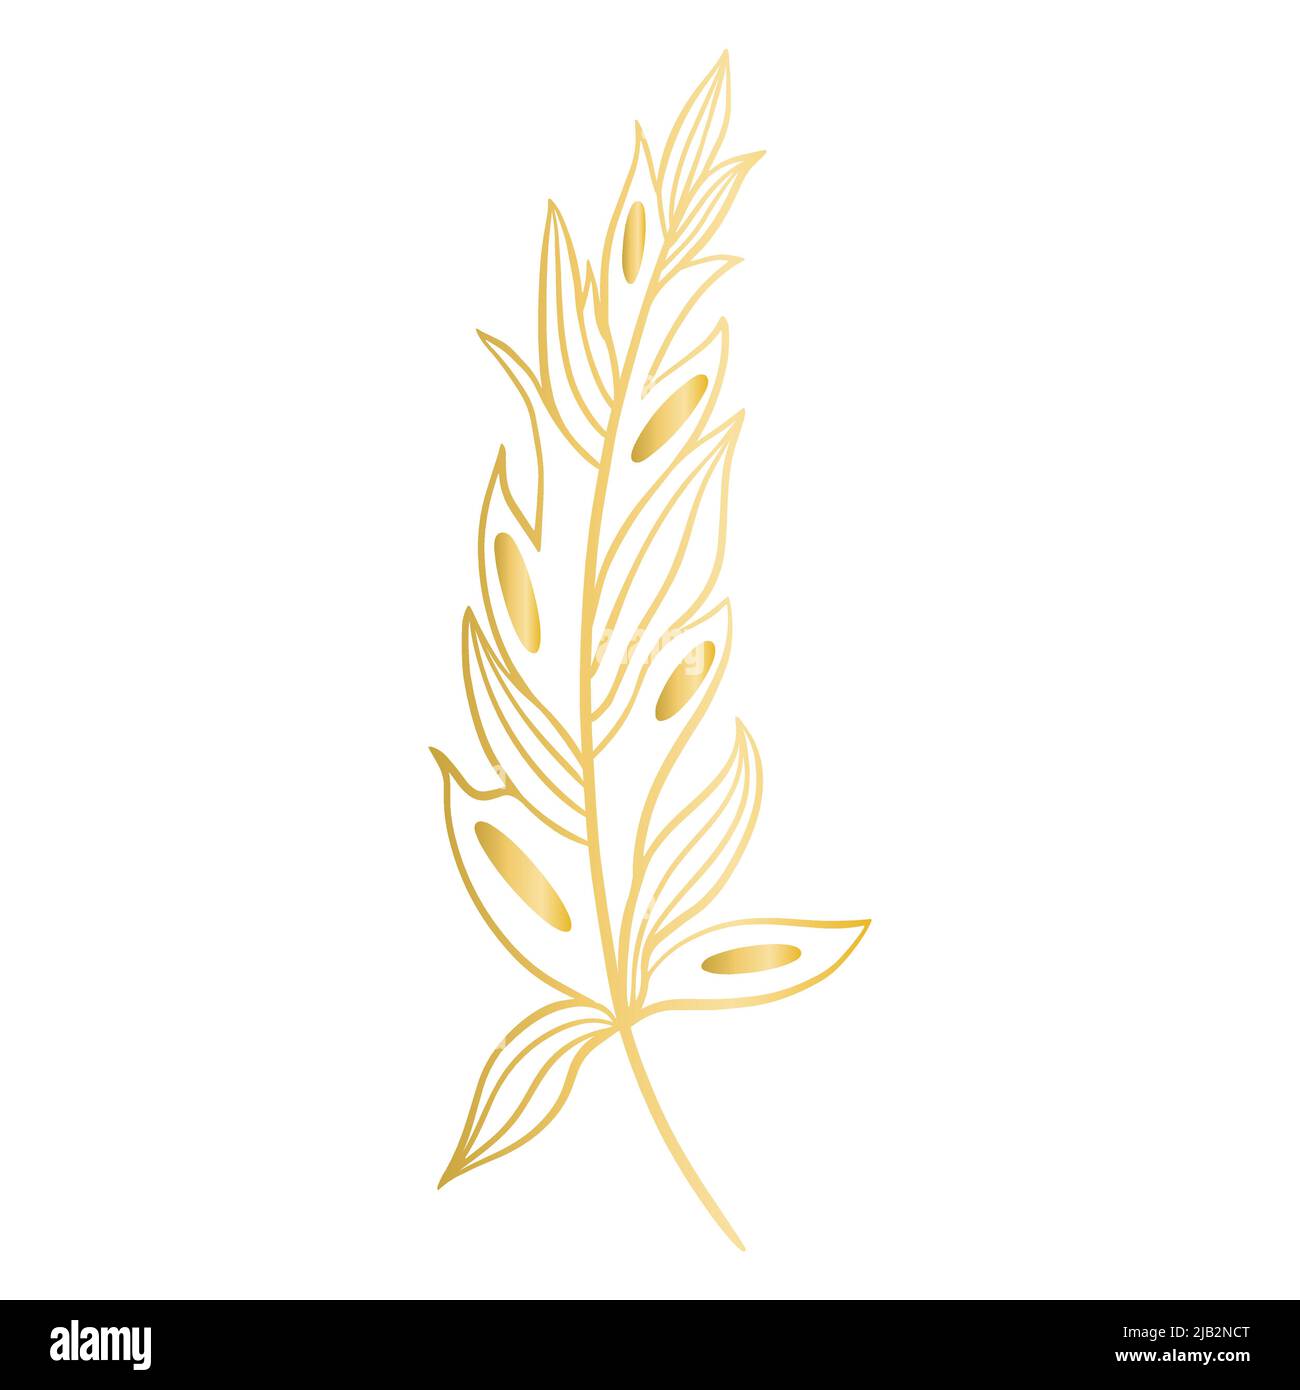 Plumas doradas imágenes de stock de arte vectorial